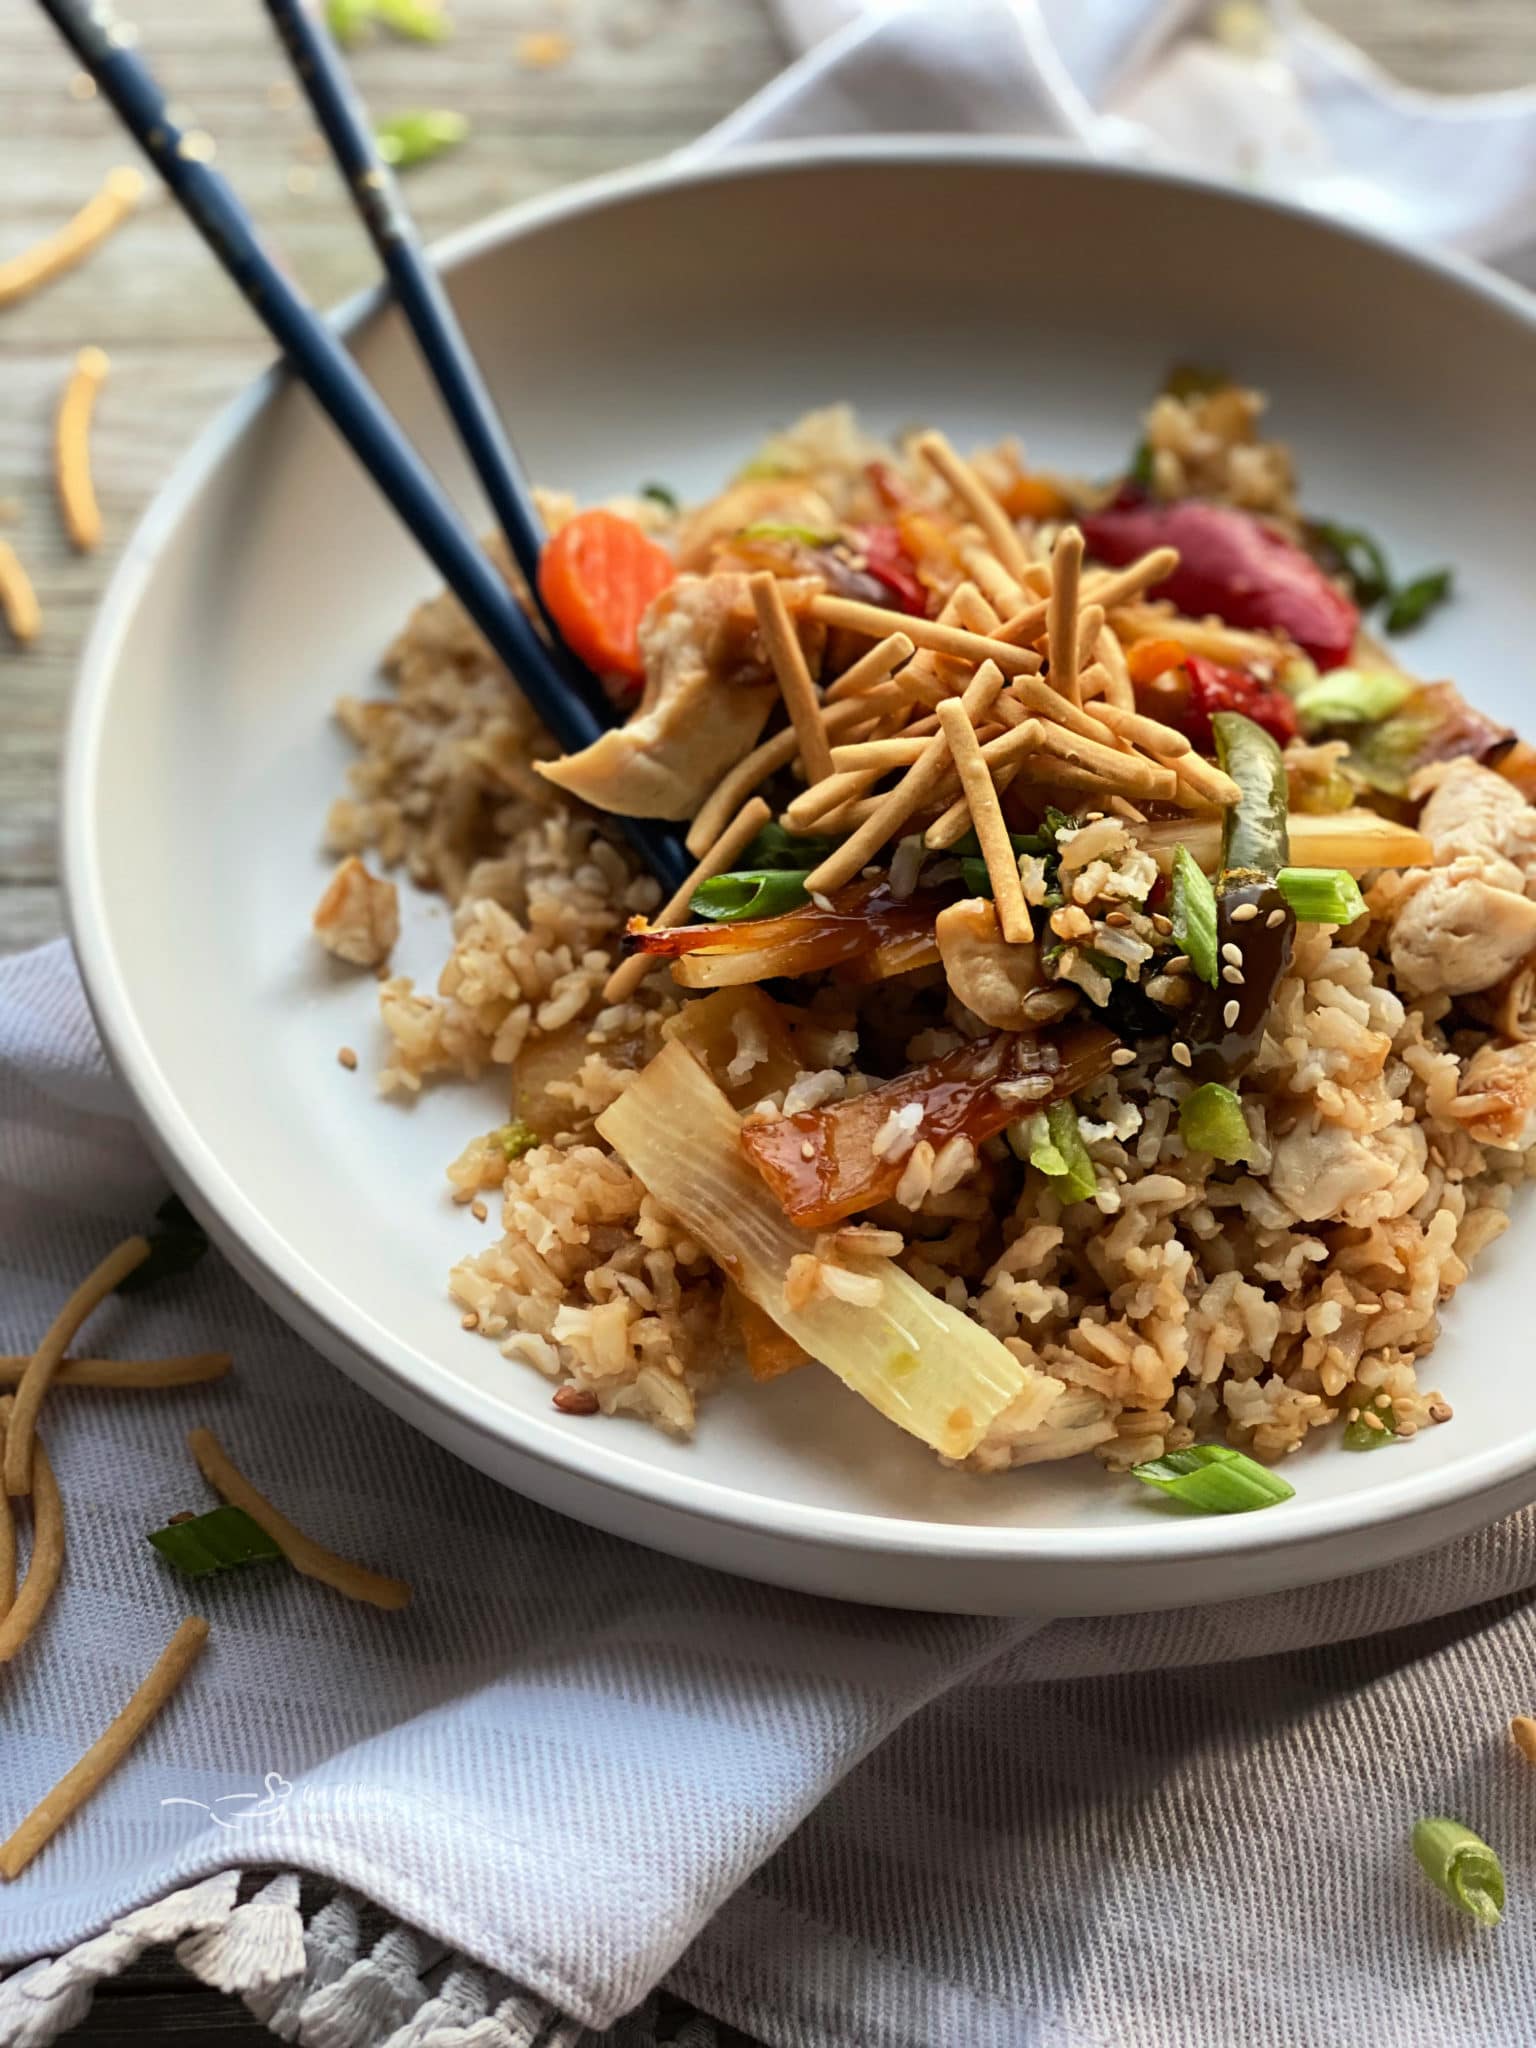 Teriyaki Chicken Casserole Recipe - simple, one pot meal